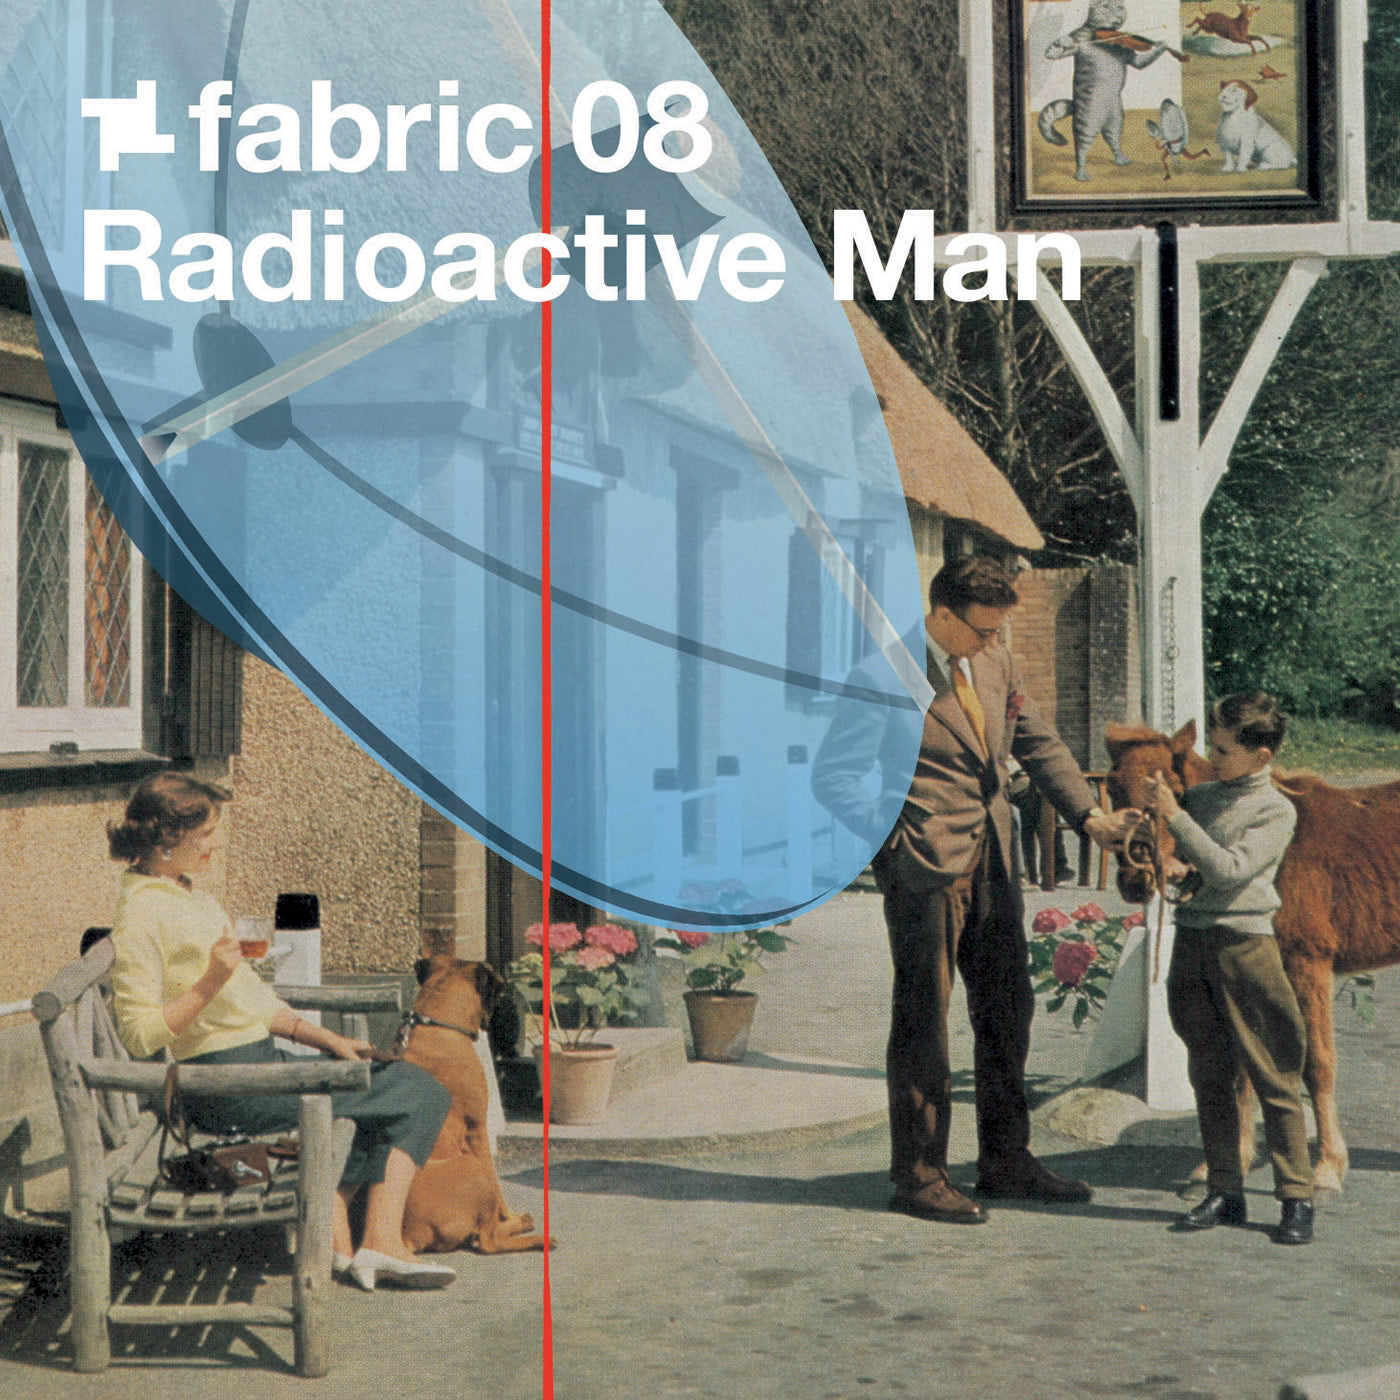 Radioactive Man - fabric 08 CD